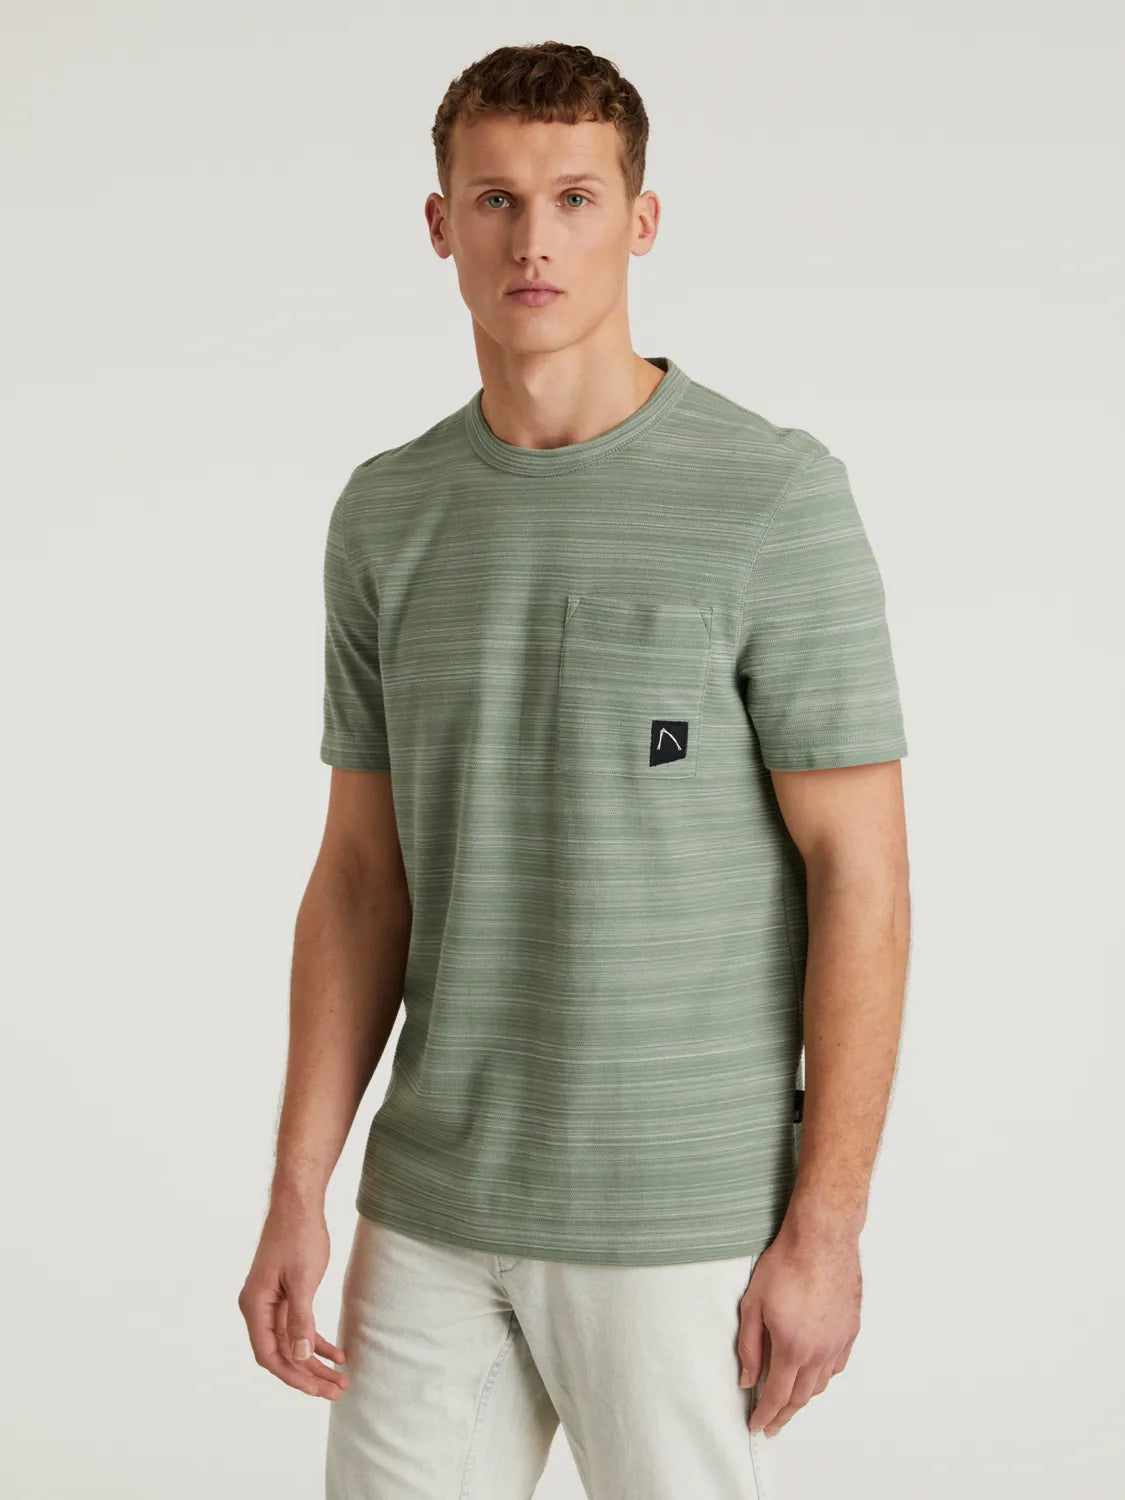 CHASIN | Morrow T-Shirt | E50 ARMY